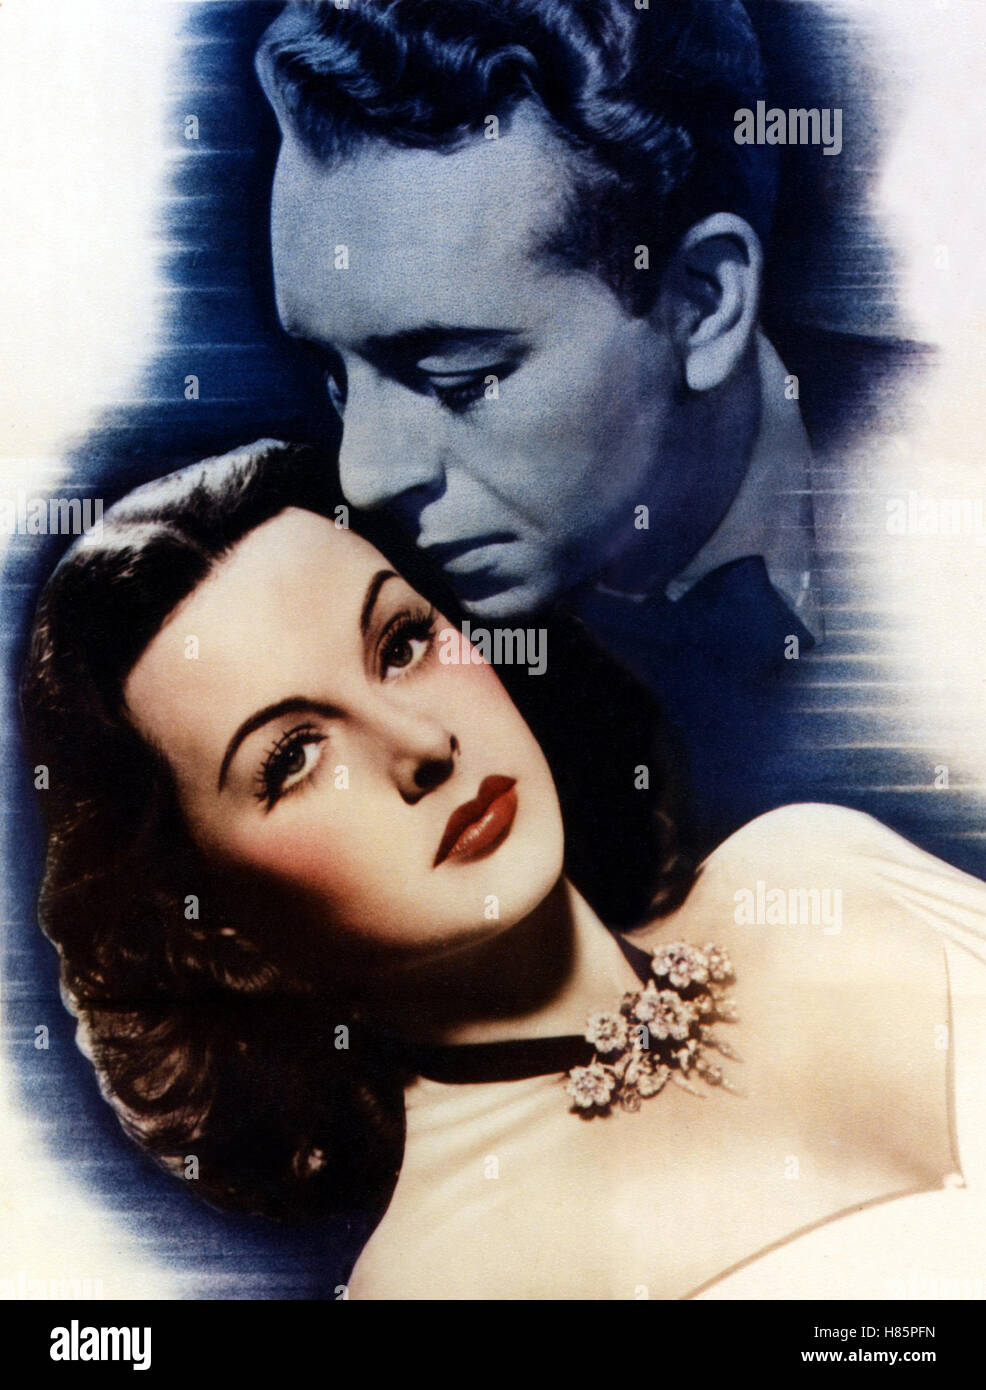 Der Ring der Verschworenen, (i cospiratori) USA 1944, Regie: Jean Negulesco, Hedy Lamarr, Paul Henreid Foto Stock